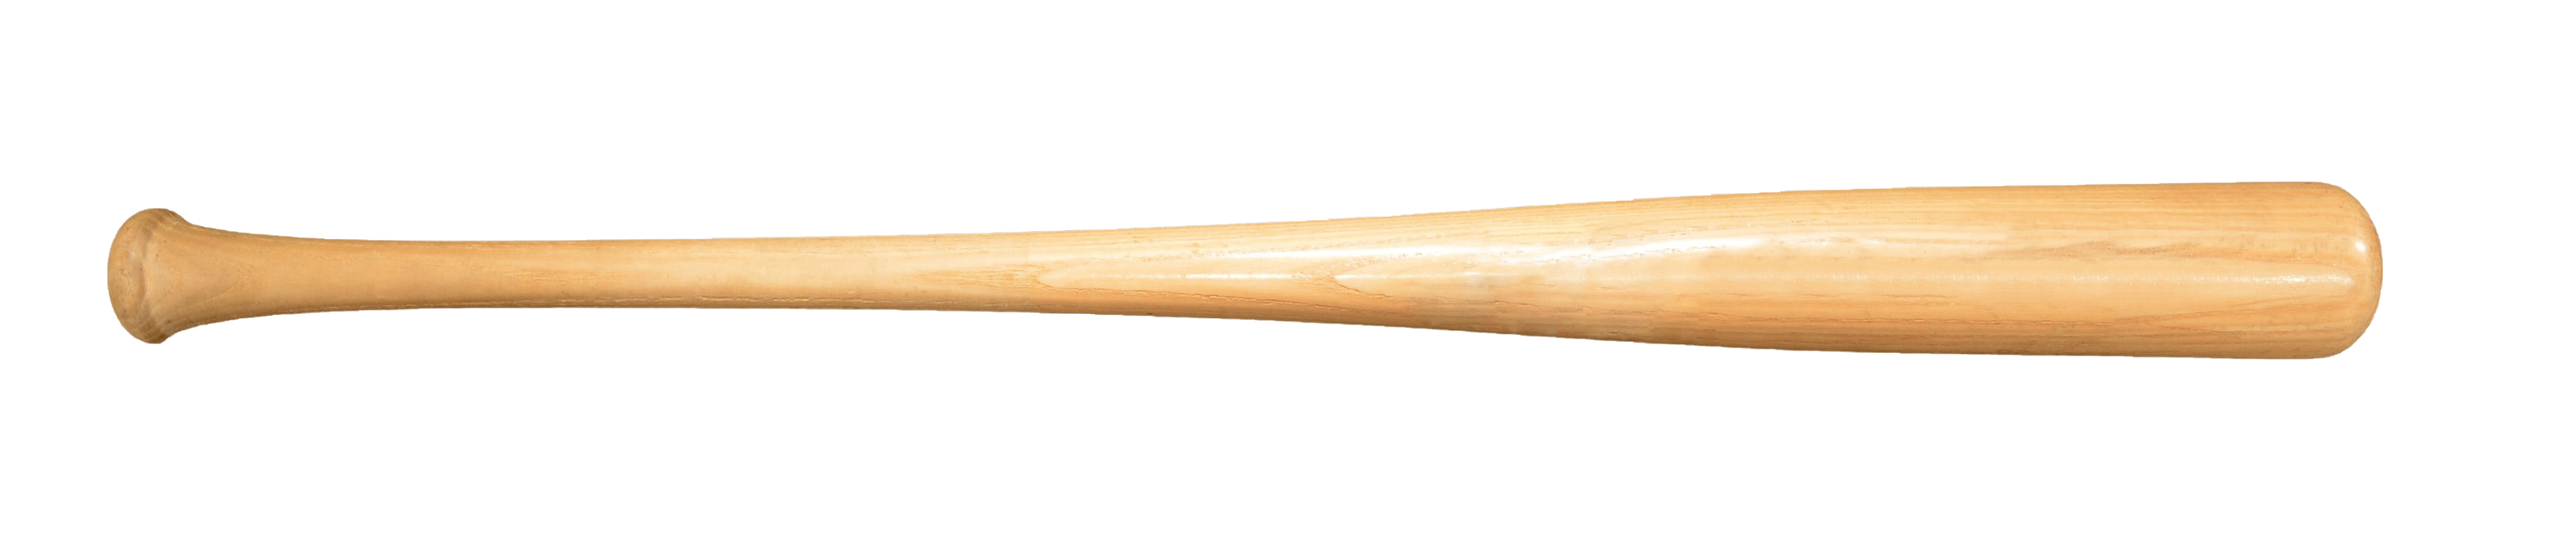 Wood baseball bat